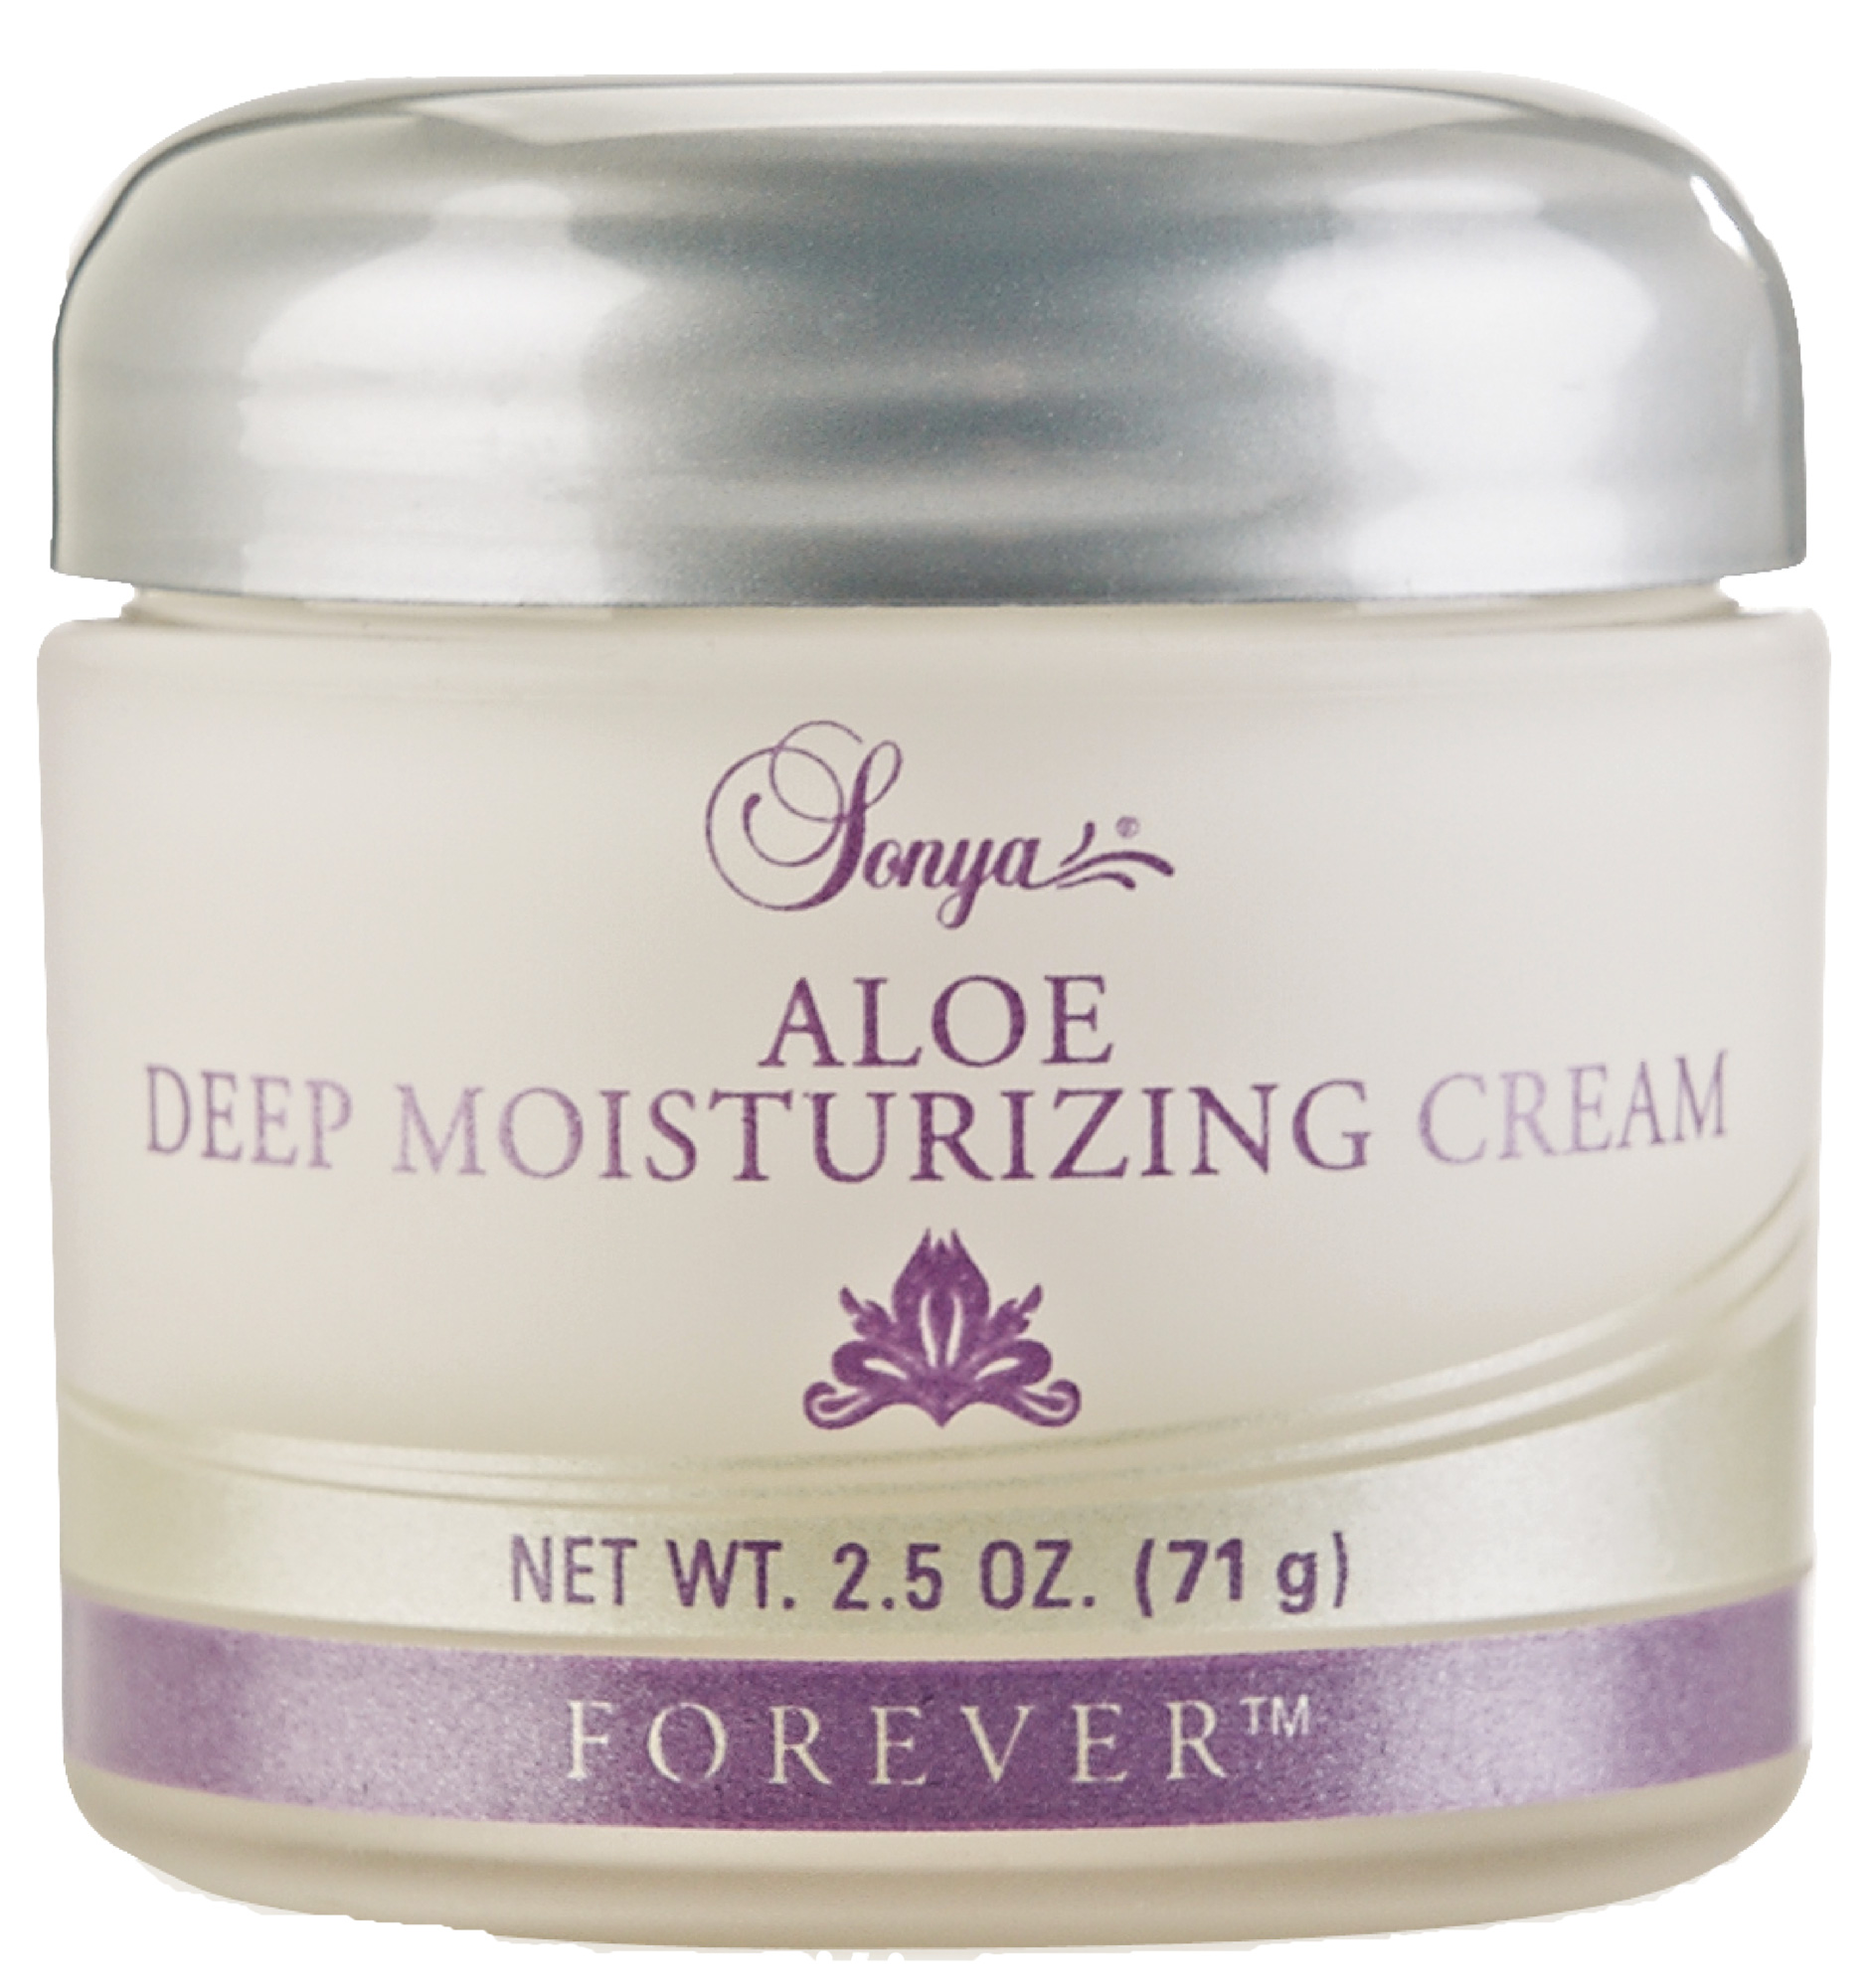 FOREVER Sonya Aloe Deep Moisturizing Cream